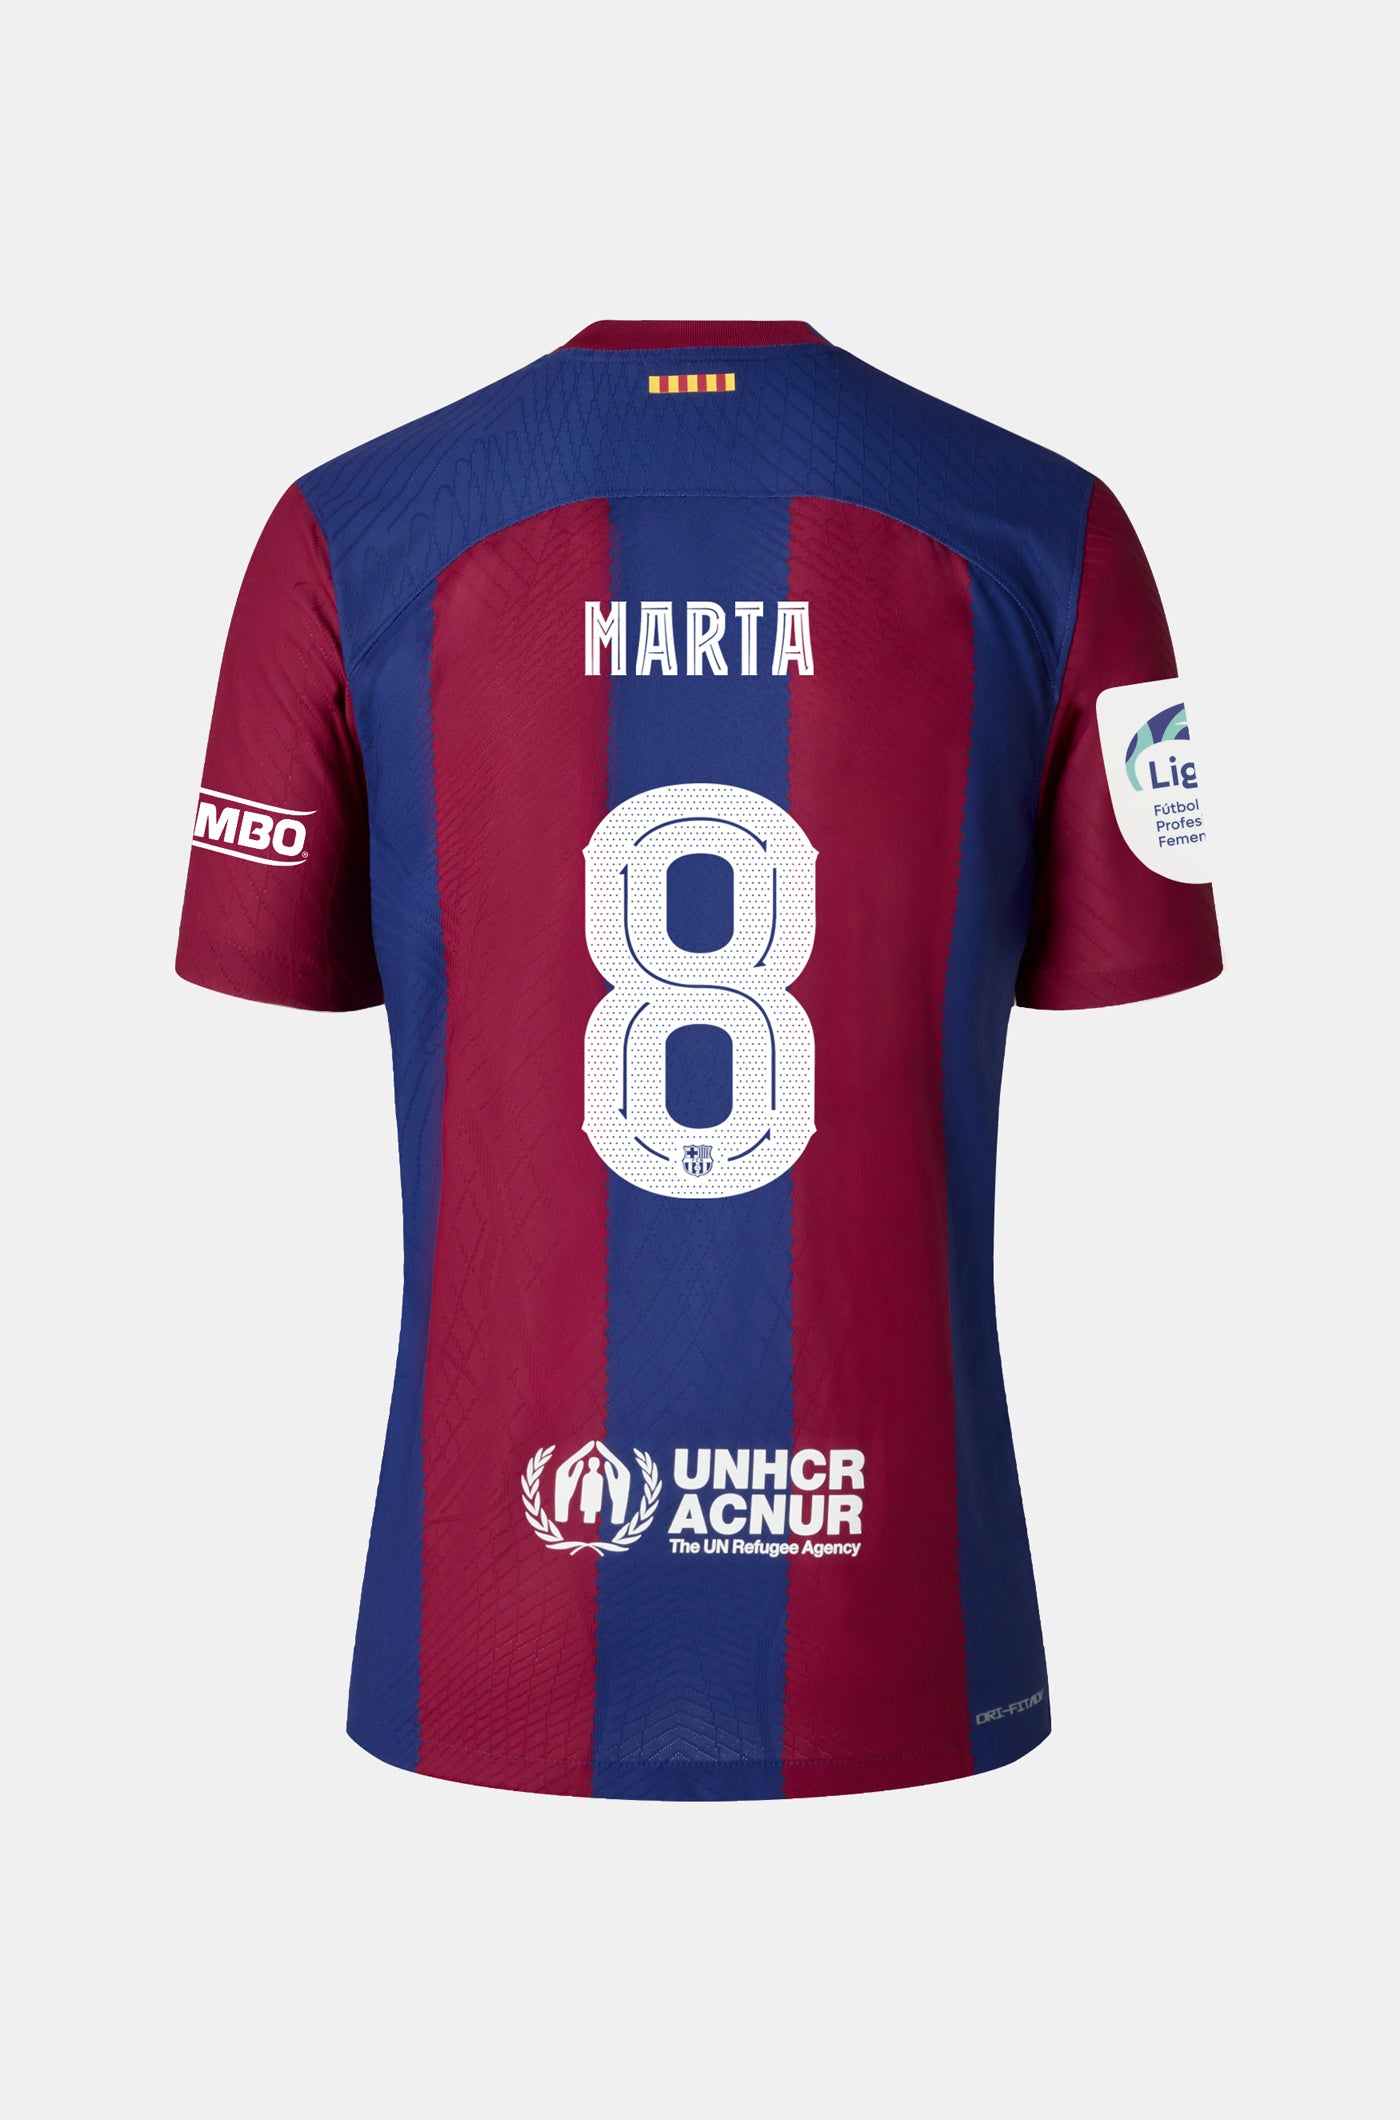 Liga F FC Barcelona home shirt 23/24 Player's Edition - MARTA